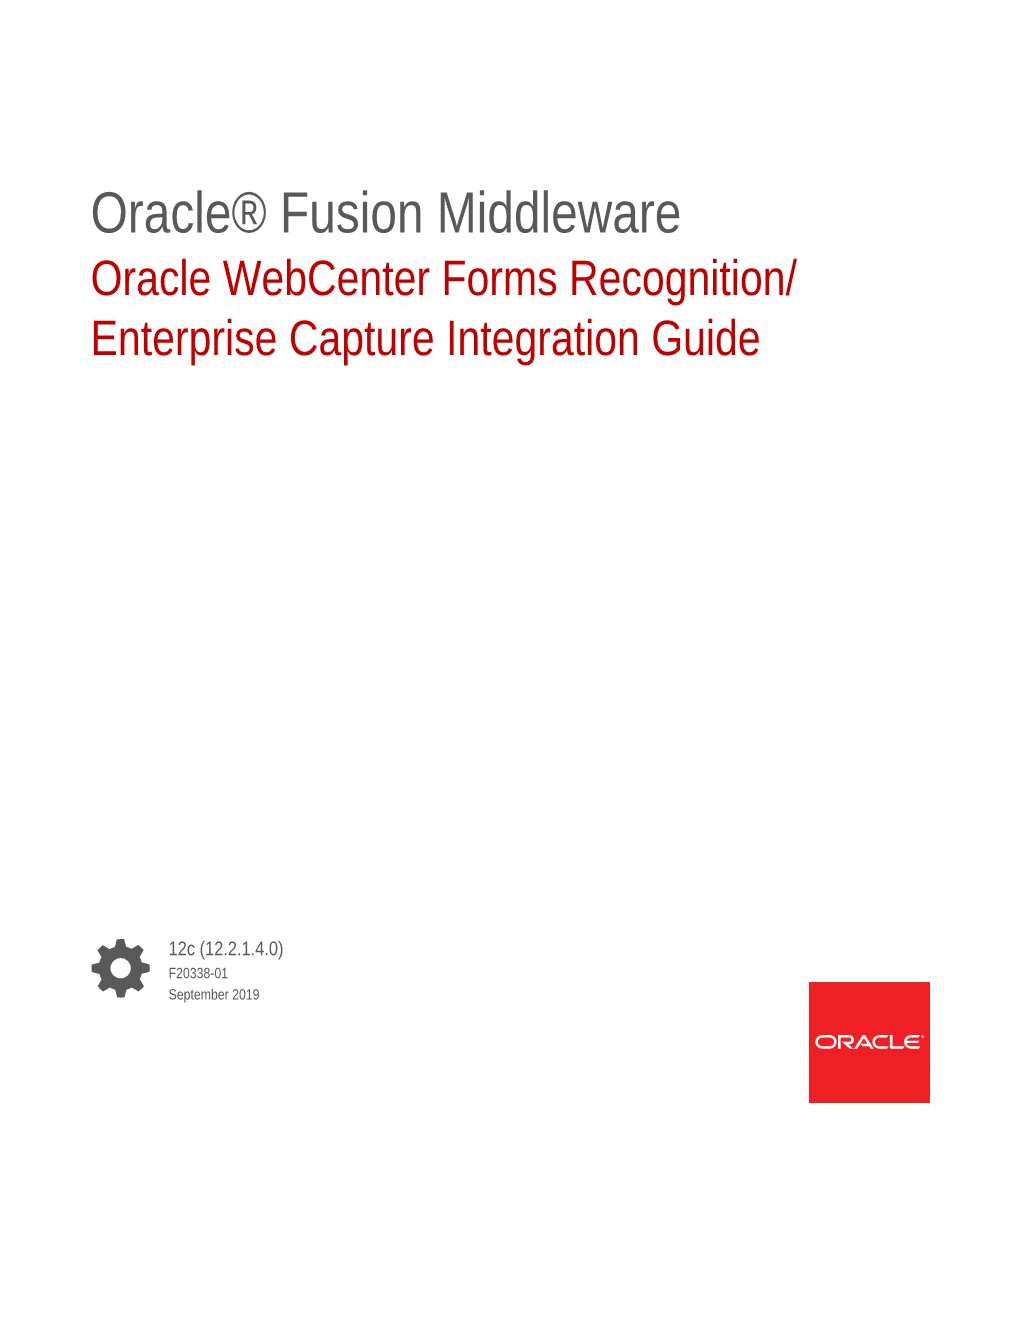 Oracle Webcenter Forms Recognition/Enterprise Capture Integration Guide, 12C (12.2.1.4.0)